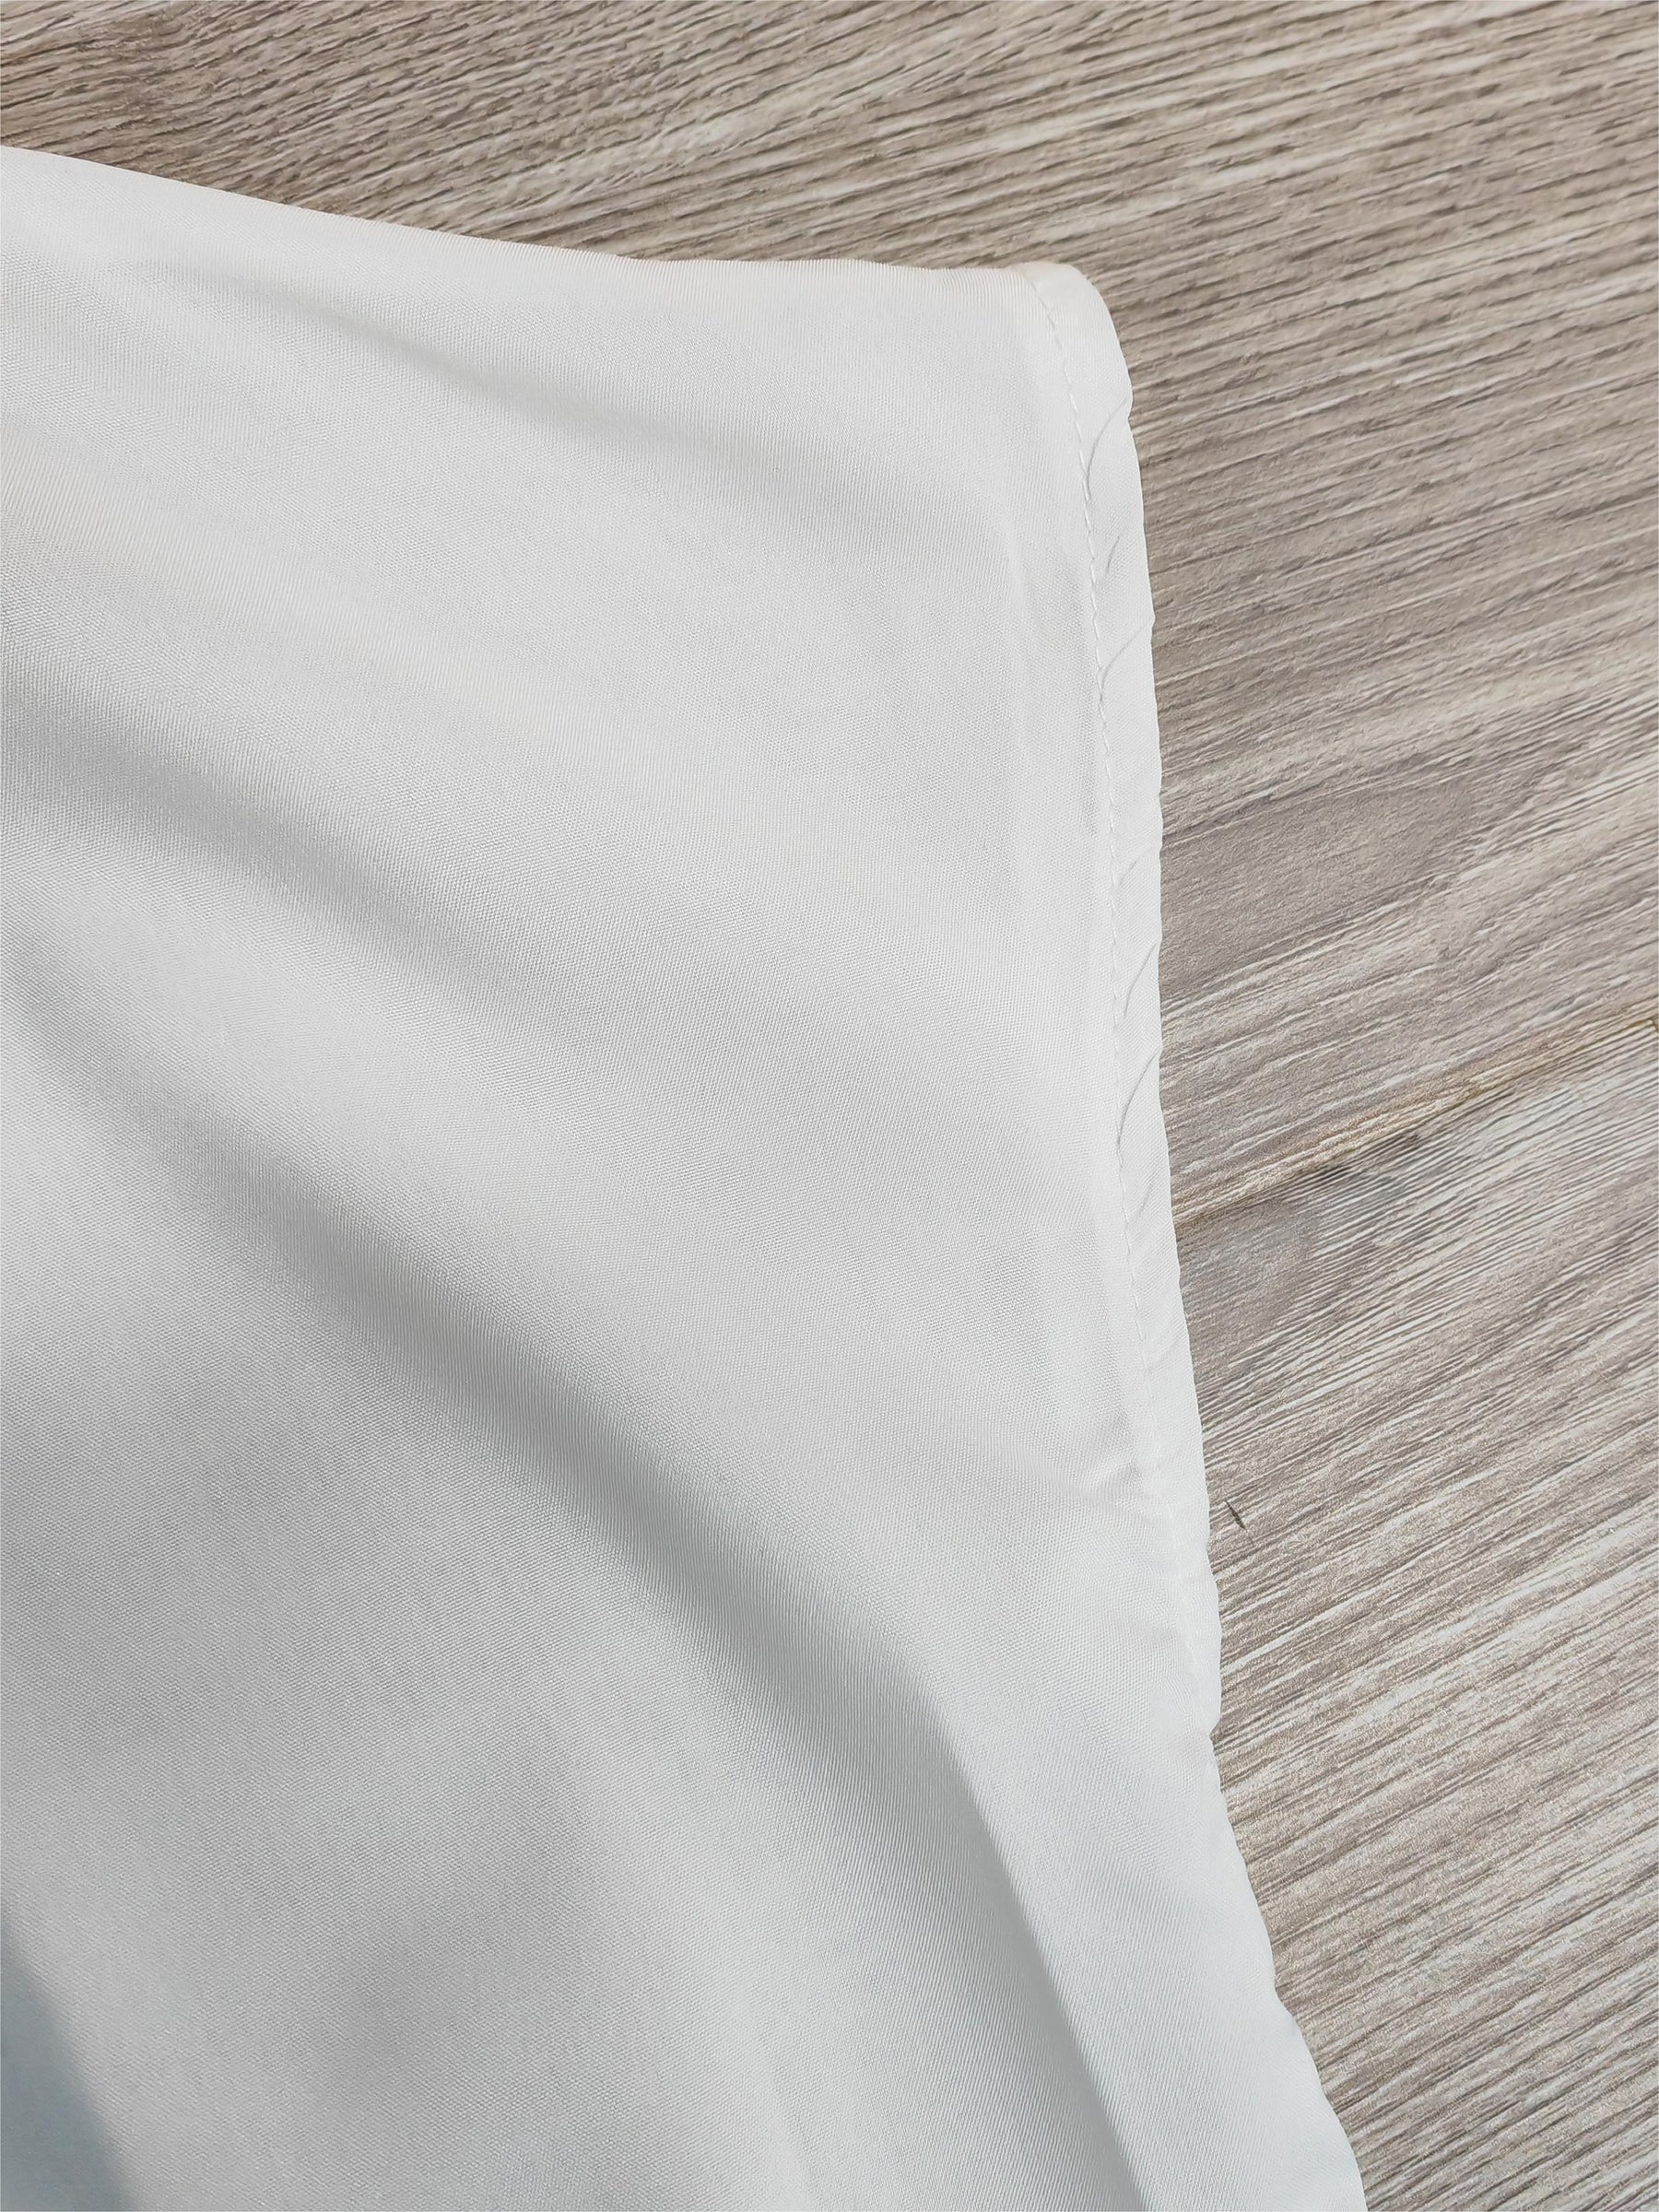 SpringStil® - Elegantes weißes einfarbiges Top